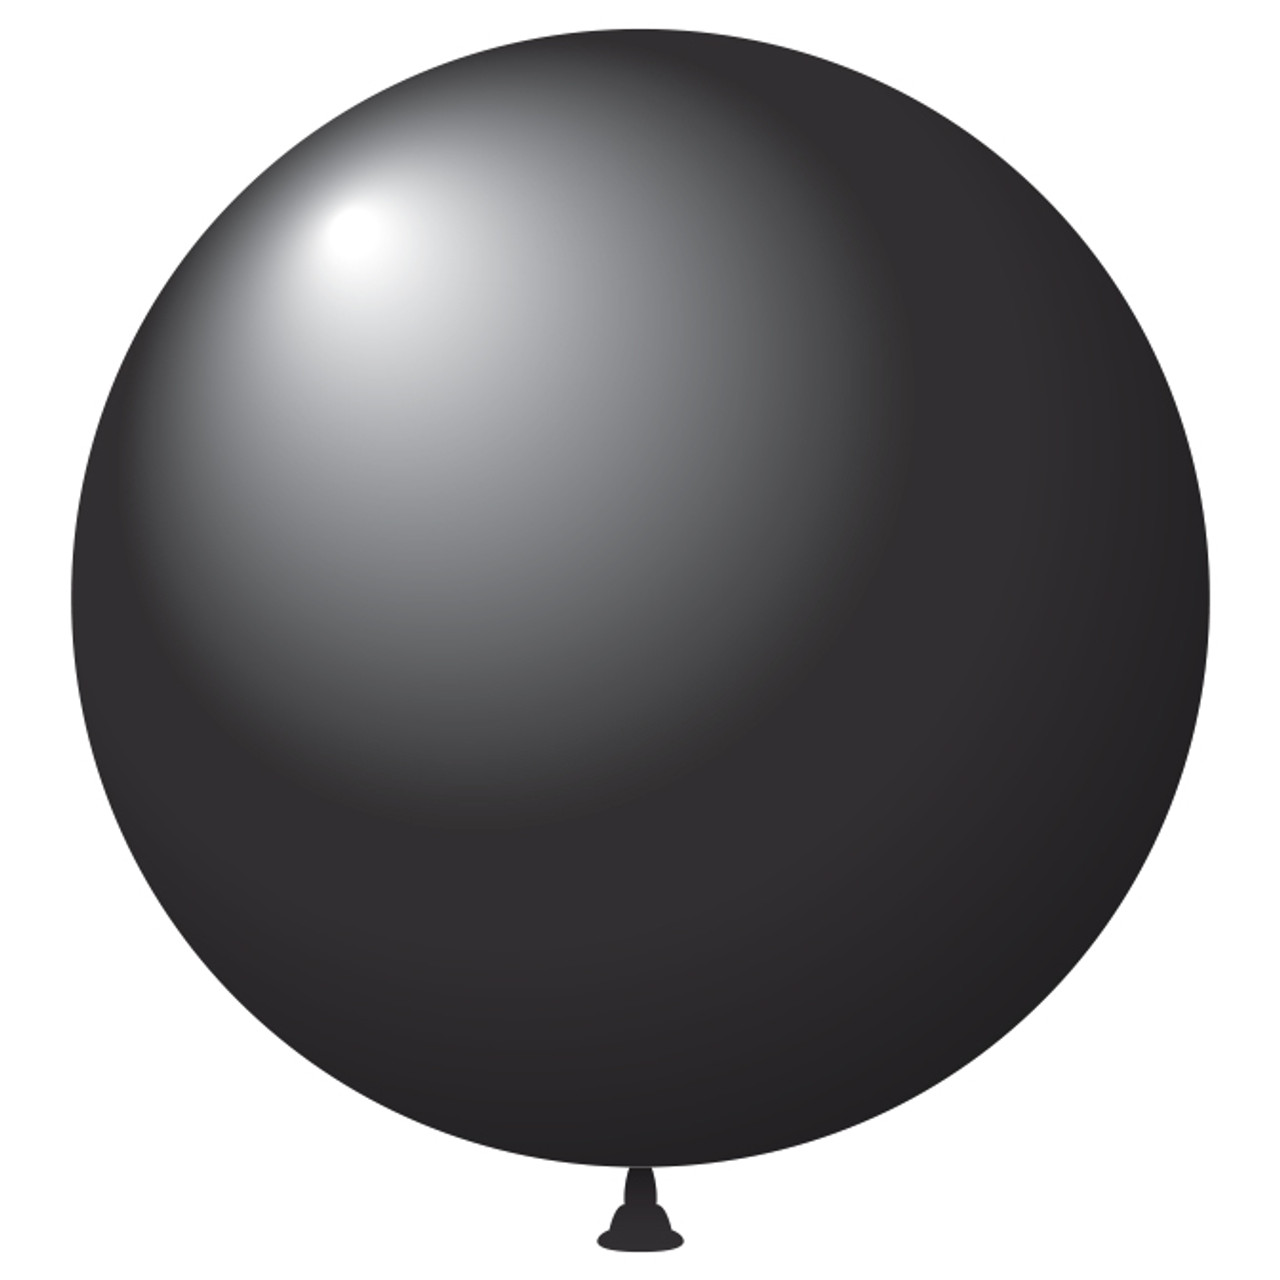 17" Black Crystal Latex Balloons